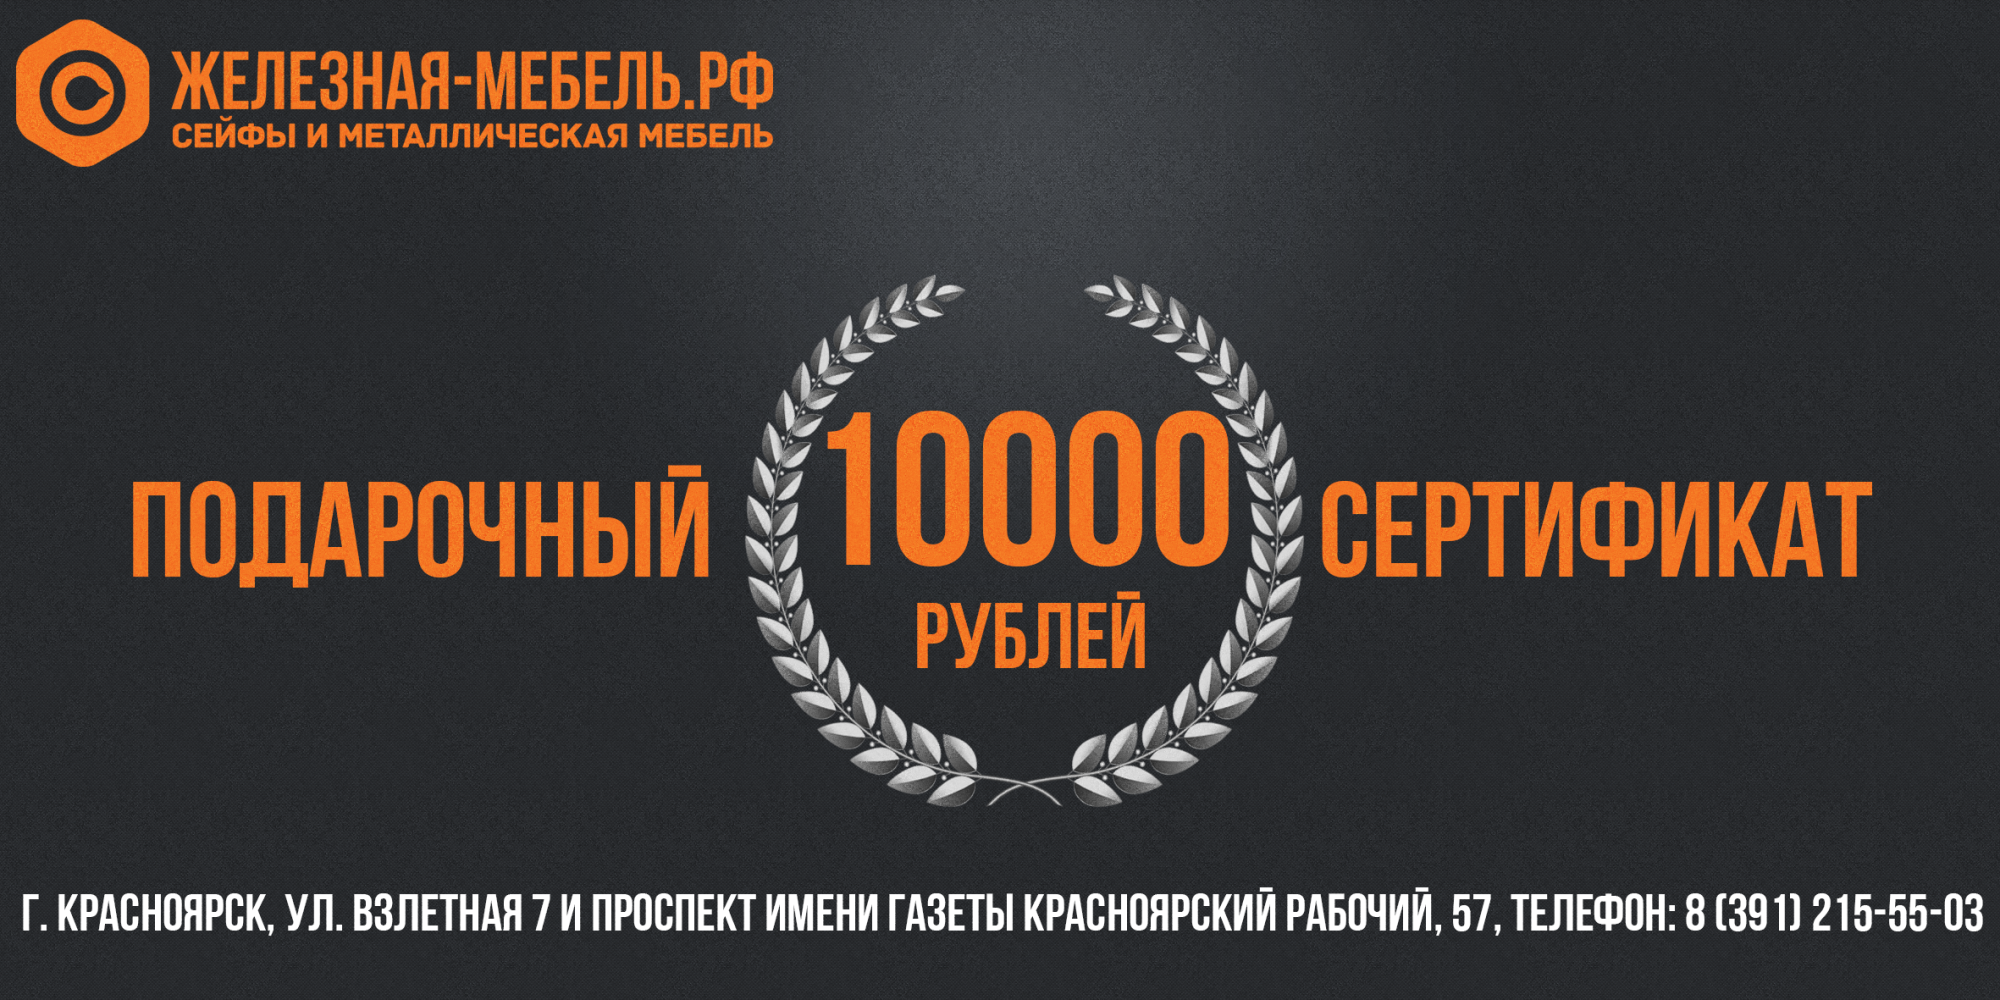 сертификат на 10000 рублей красноярск.png